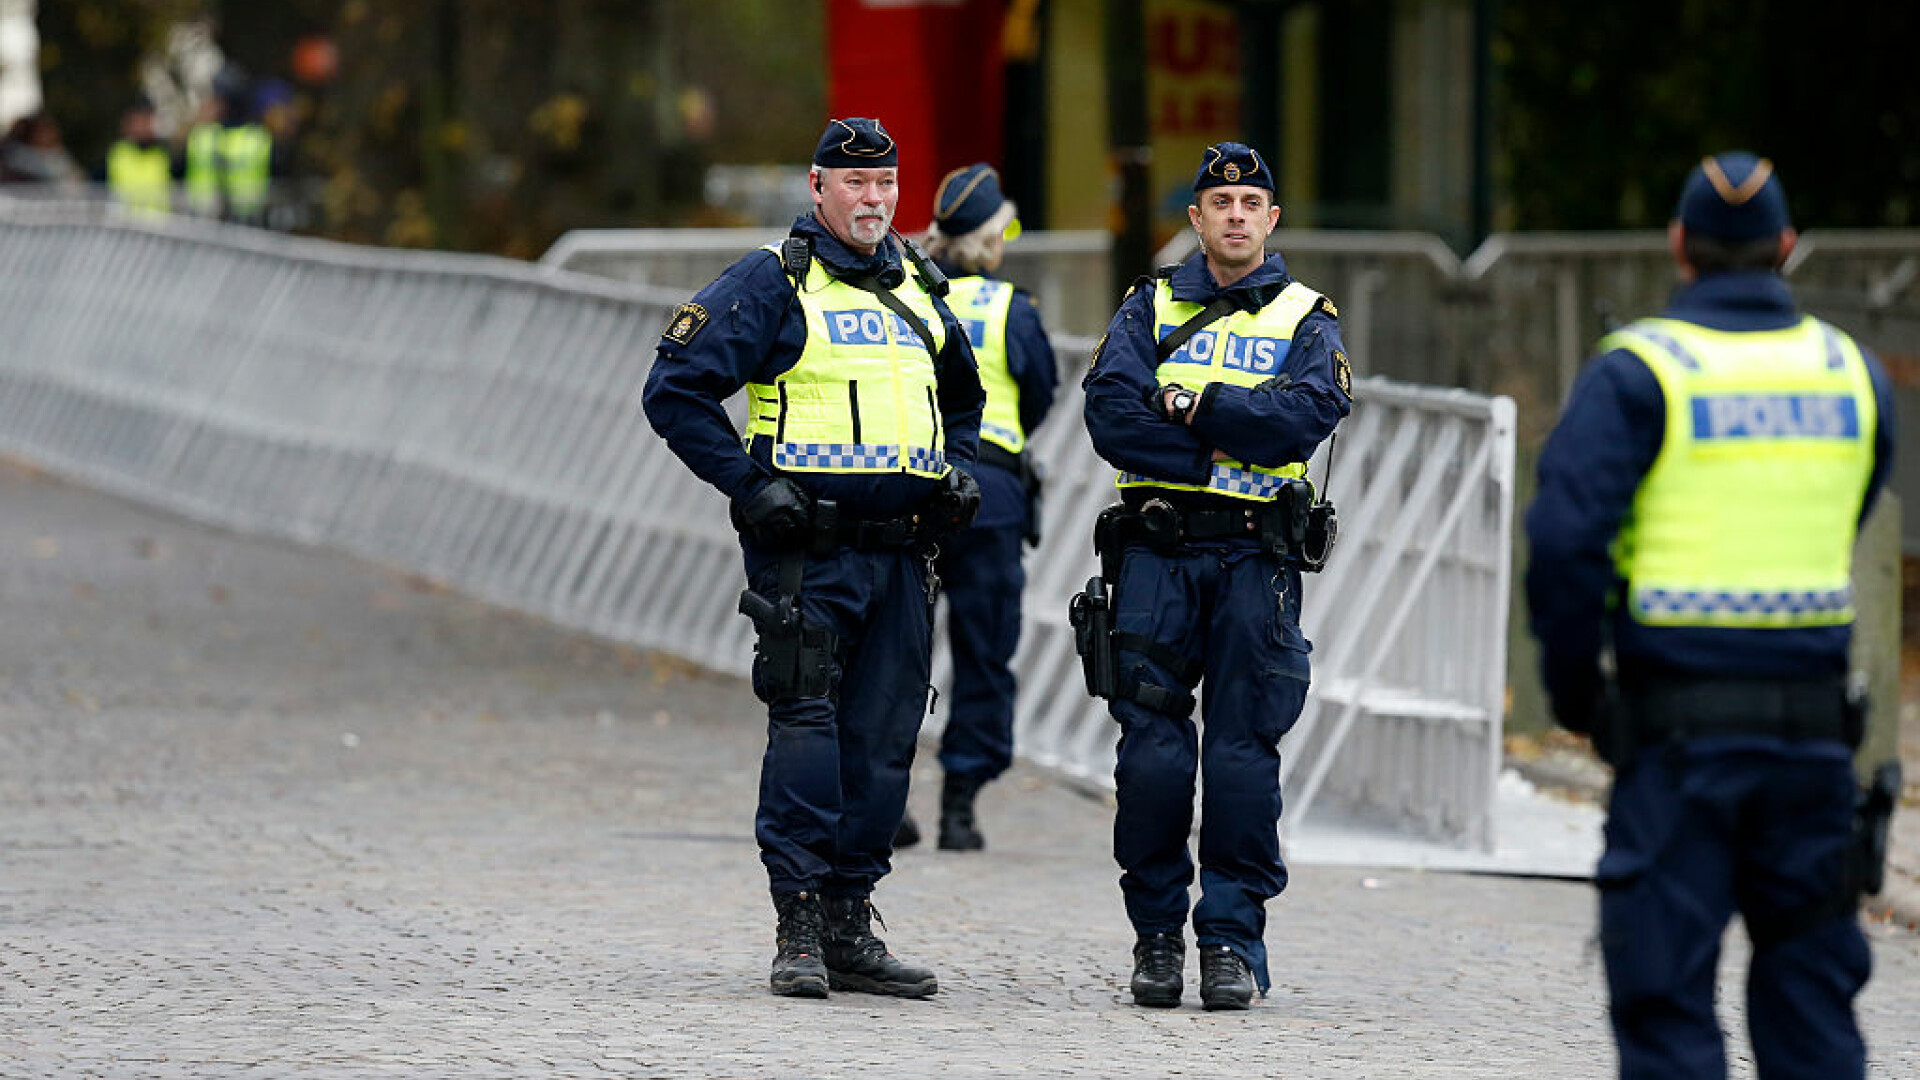 politisti suedezi